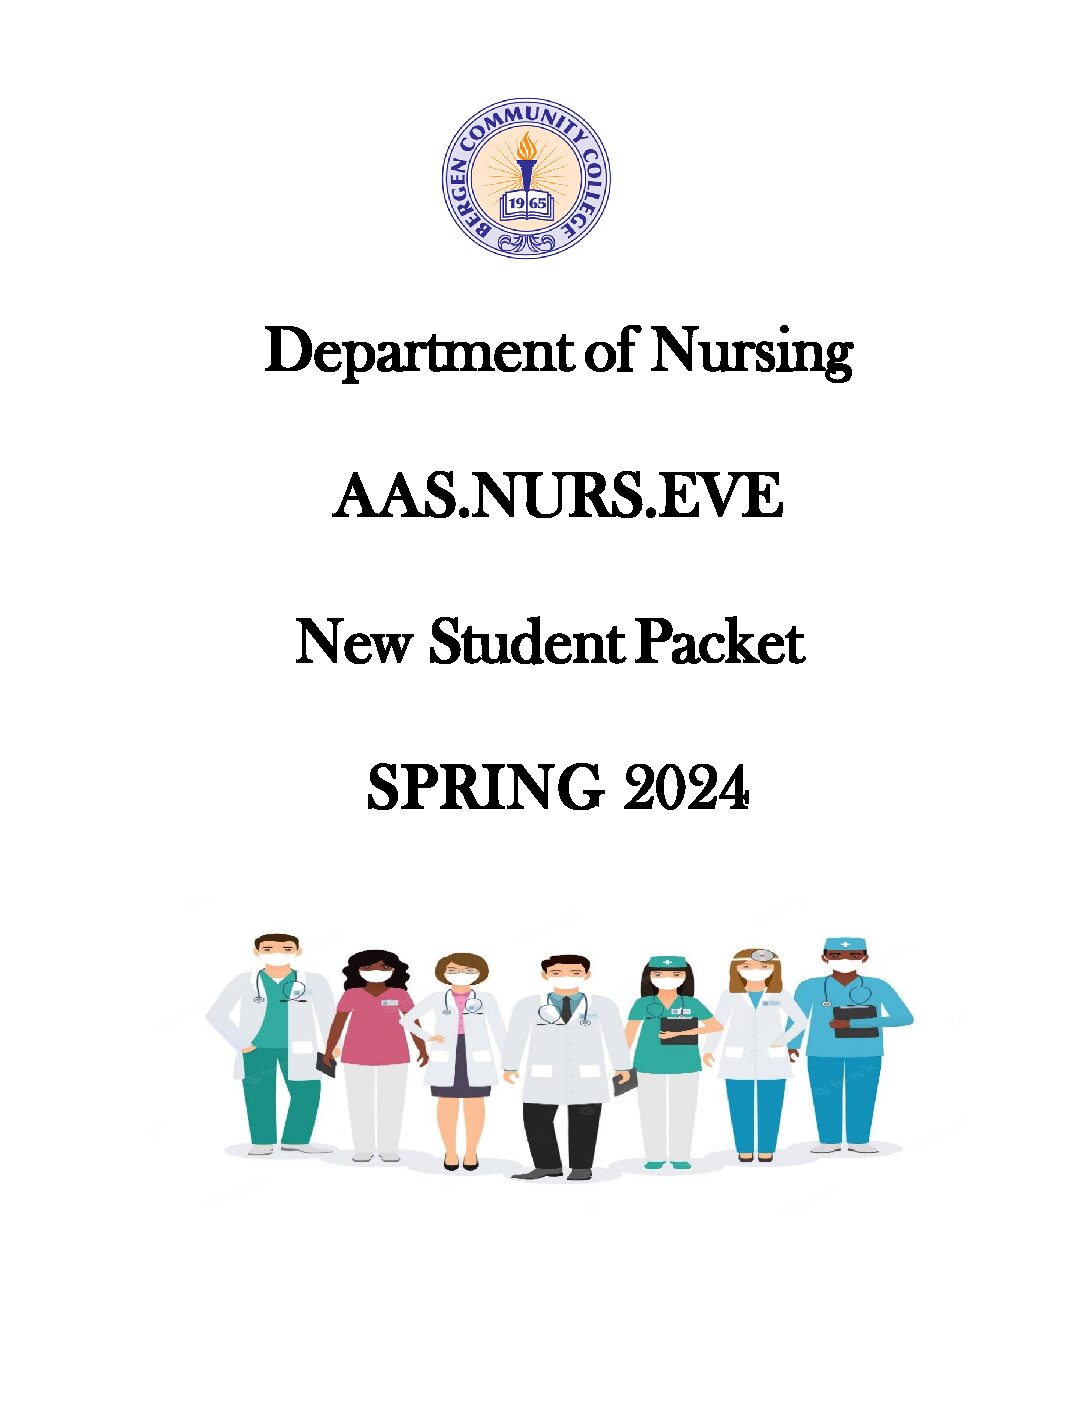 AAS Nursing Eve Spring 2024 Student Packet